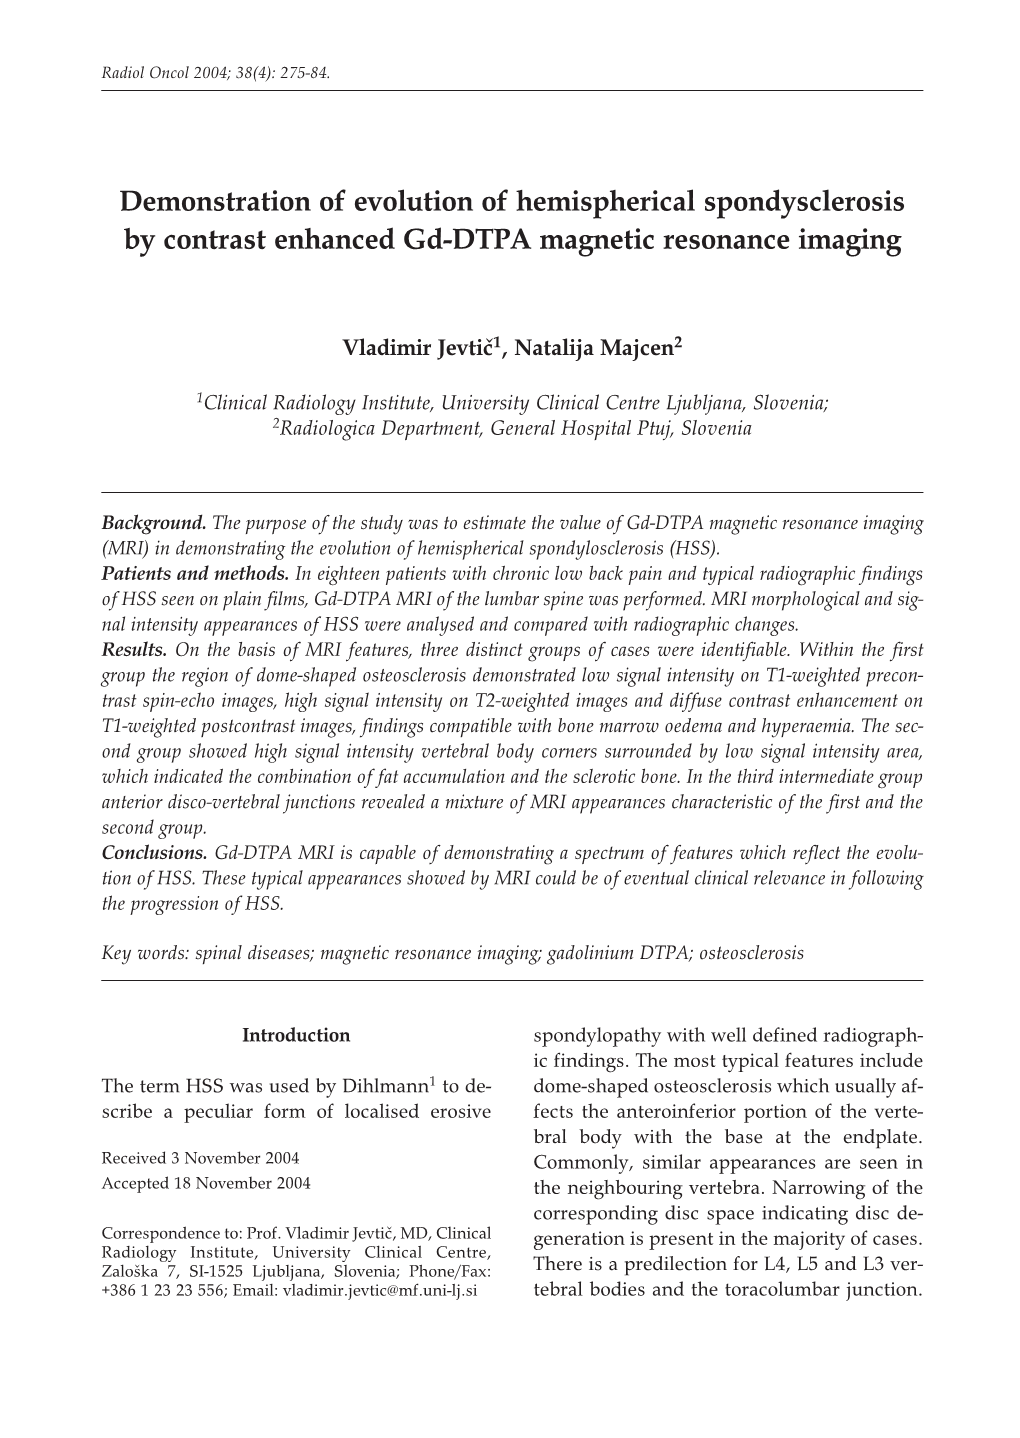 Demonstration of Evolution of Hemispherical Spondysclerosis by Contrast Enhanced Gd-DTPA Magnetic Resonance Imaging